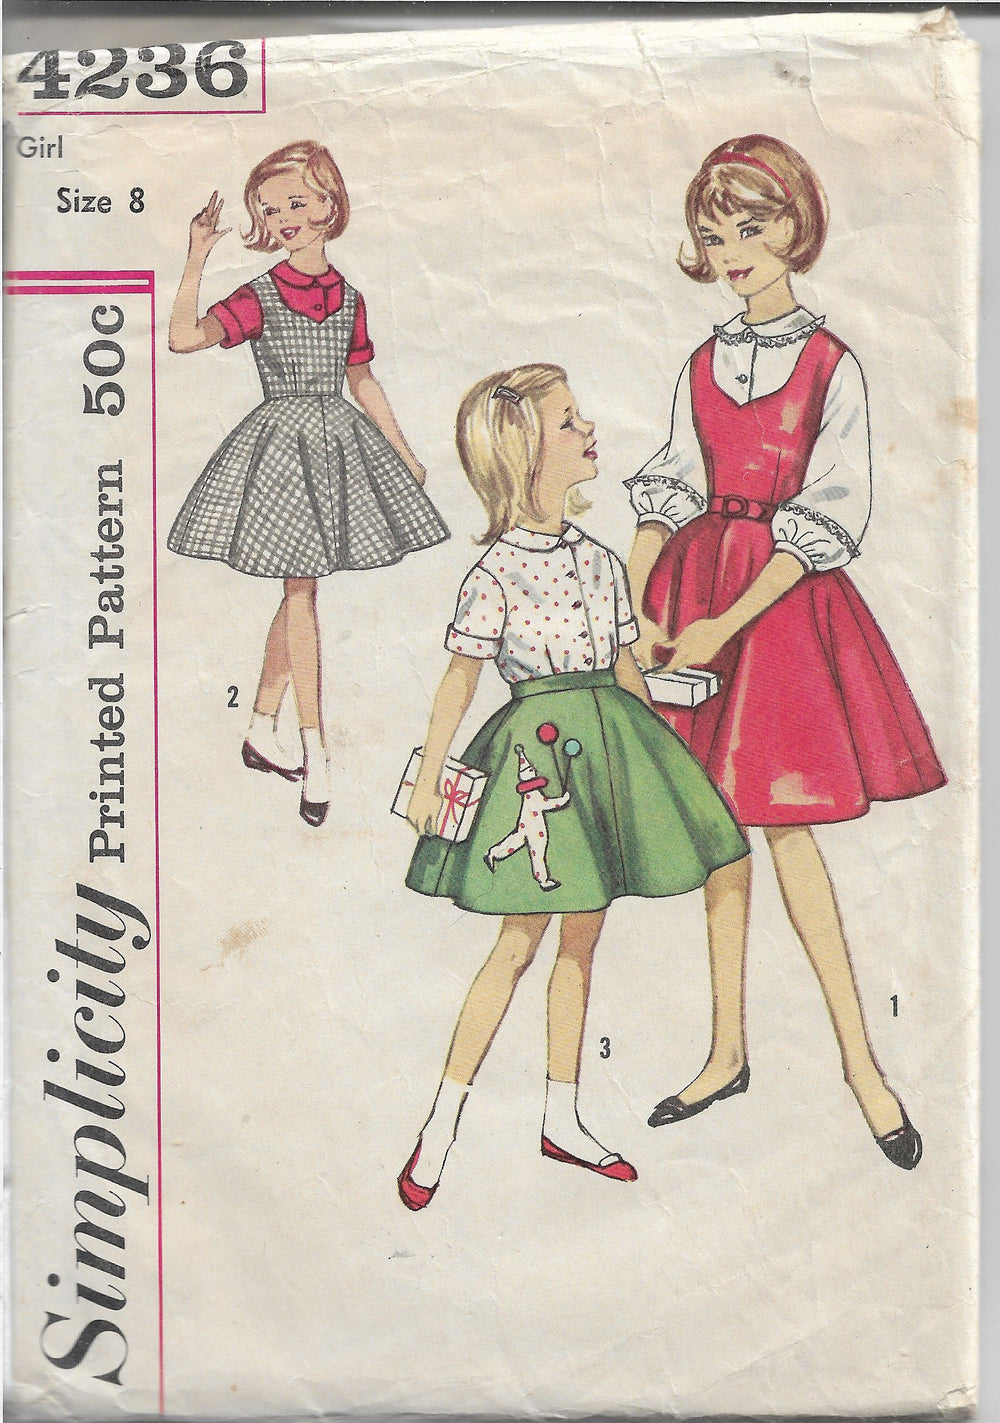 Simplicity 4236 Girls Jumper Dress Flared Skirt Vintage Sewing Pattern 1960s - VintageStitching - Vintage Sewing Patterns